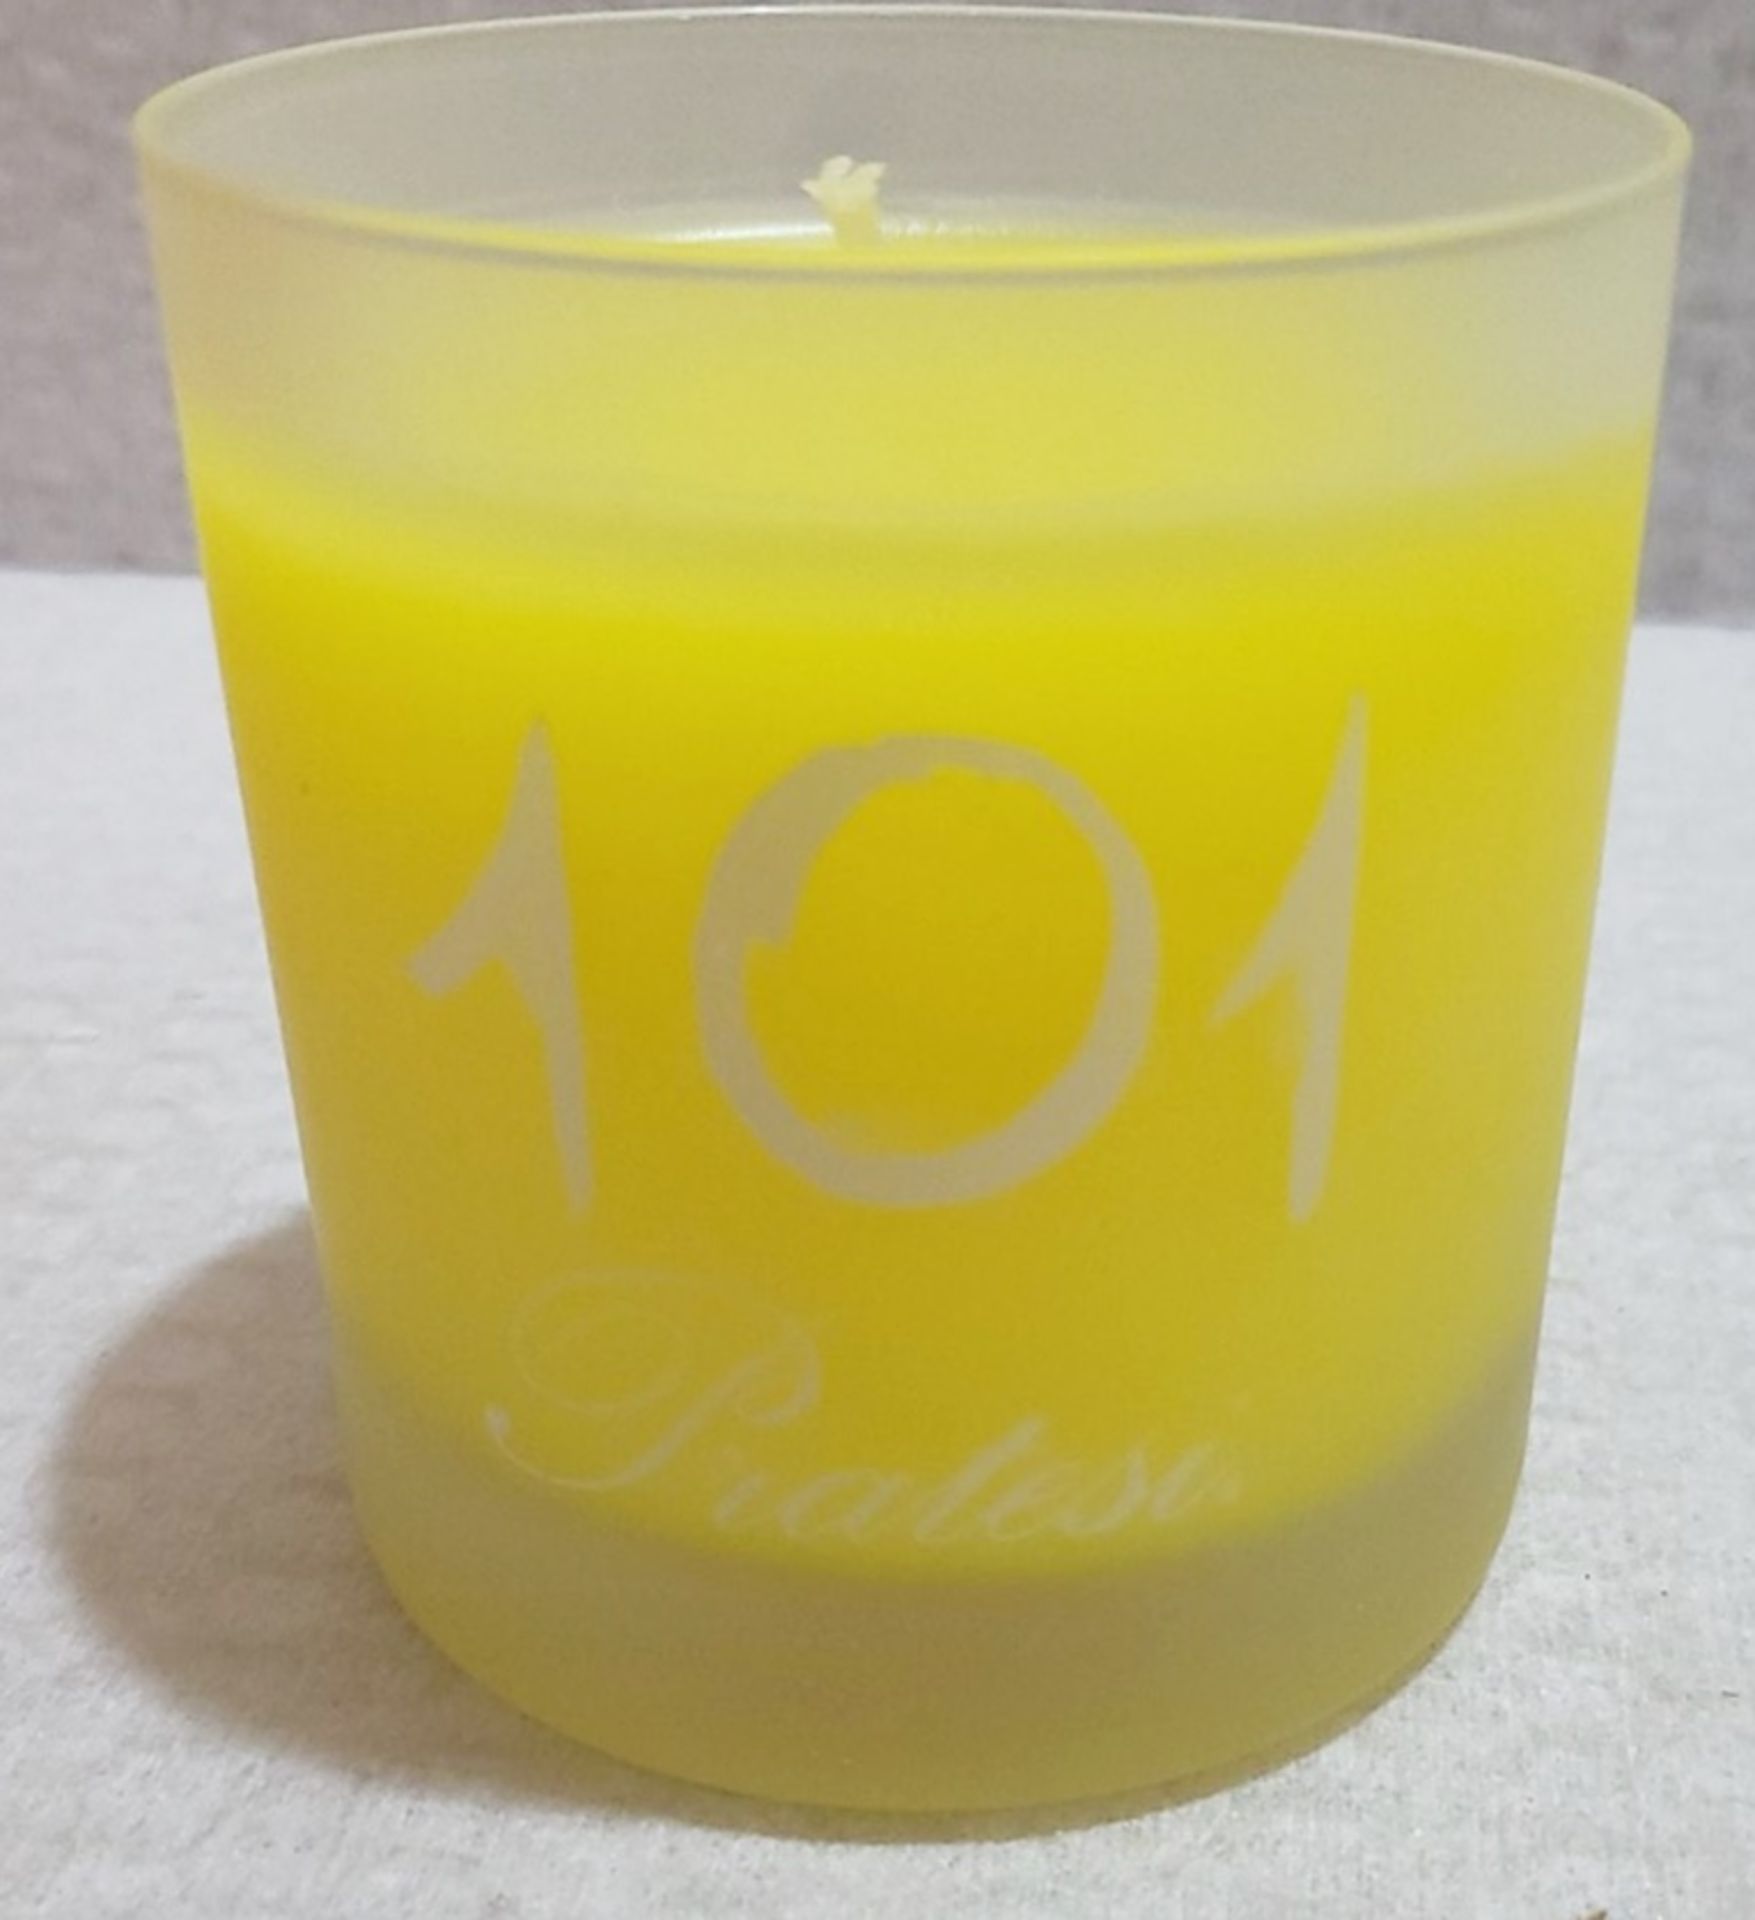 1 x PRATESI 101 Celebration Gialle In Fiore Scented Candle 200g - Original Price £60.00 - Unused - Image 6 of 6